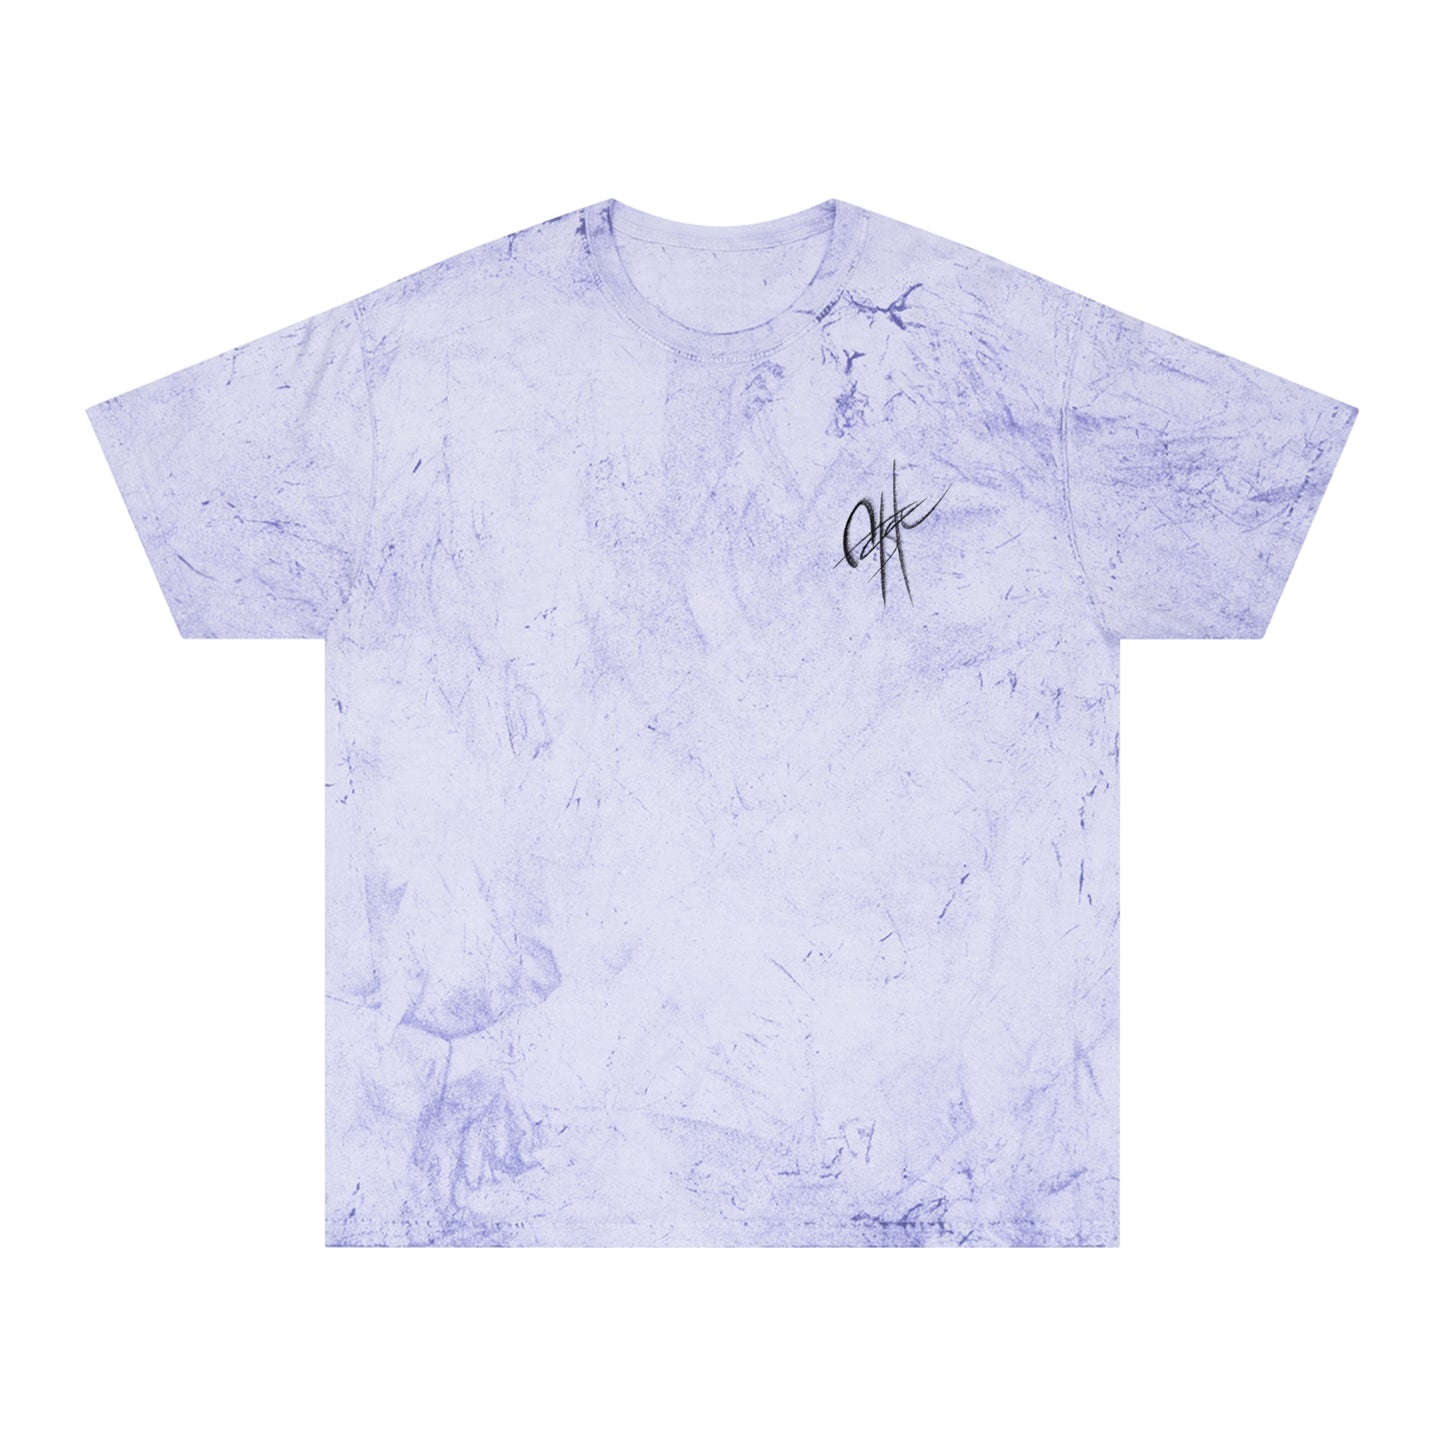 Vol 11 "Cayati & Io" Tie Dye T-Shirt